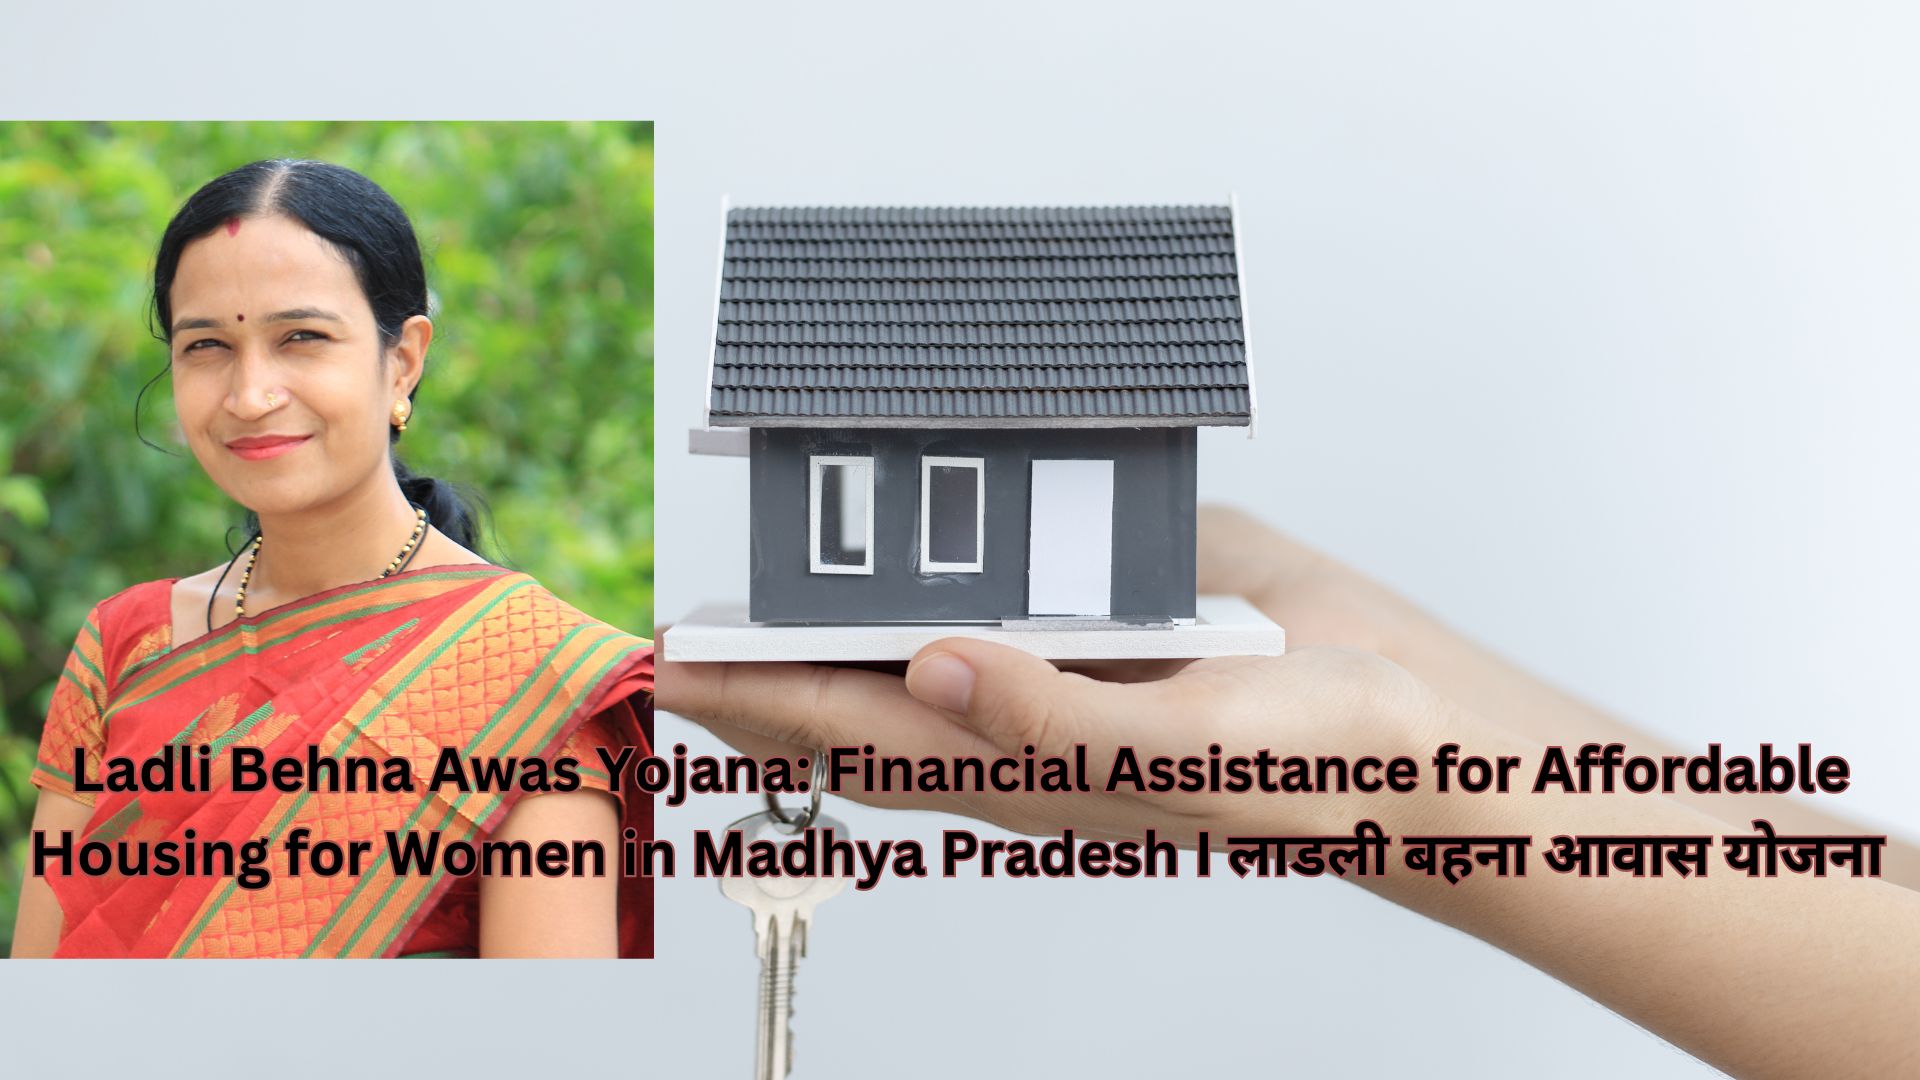 Ladli Behna Awas Yojana: Financial Assistance for Affordable Housing for Women in Madhya Pradesh I लाडली बहना आवास योजना